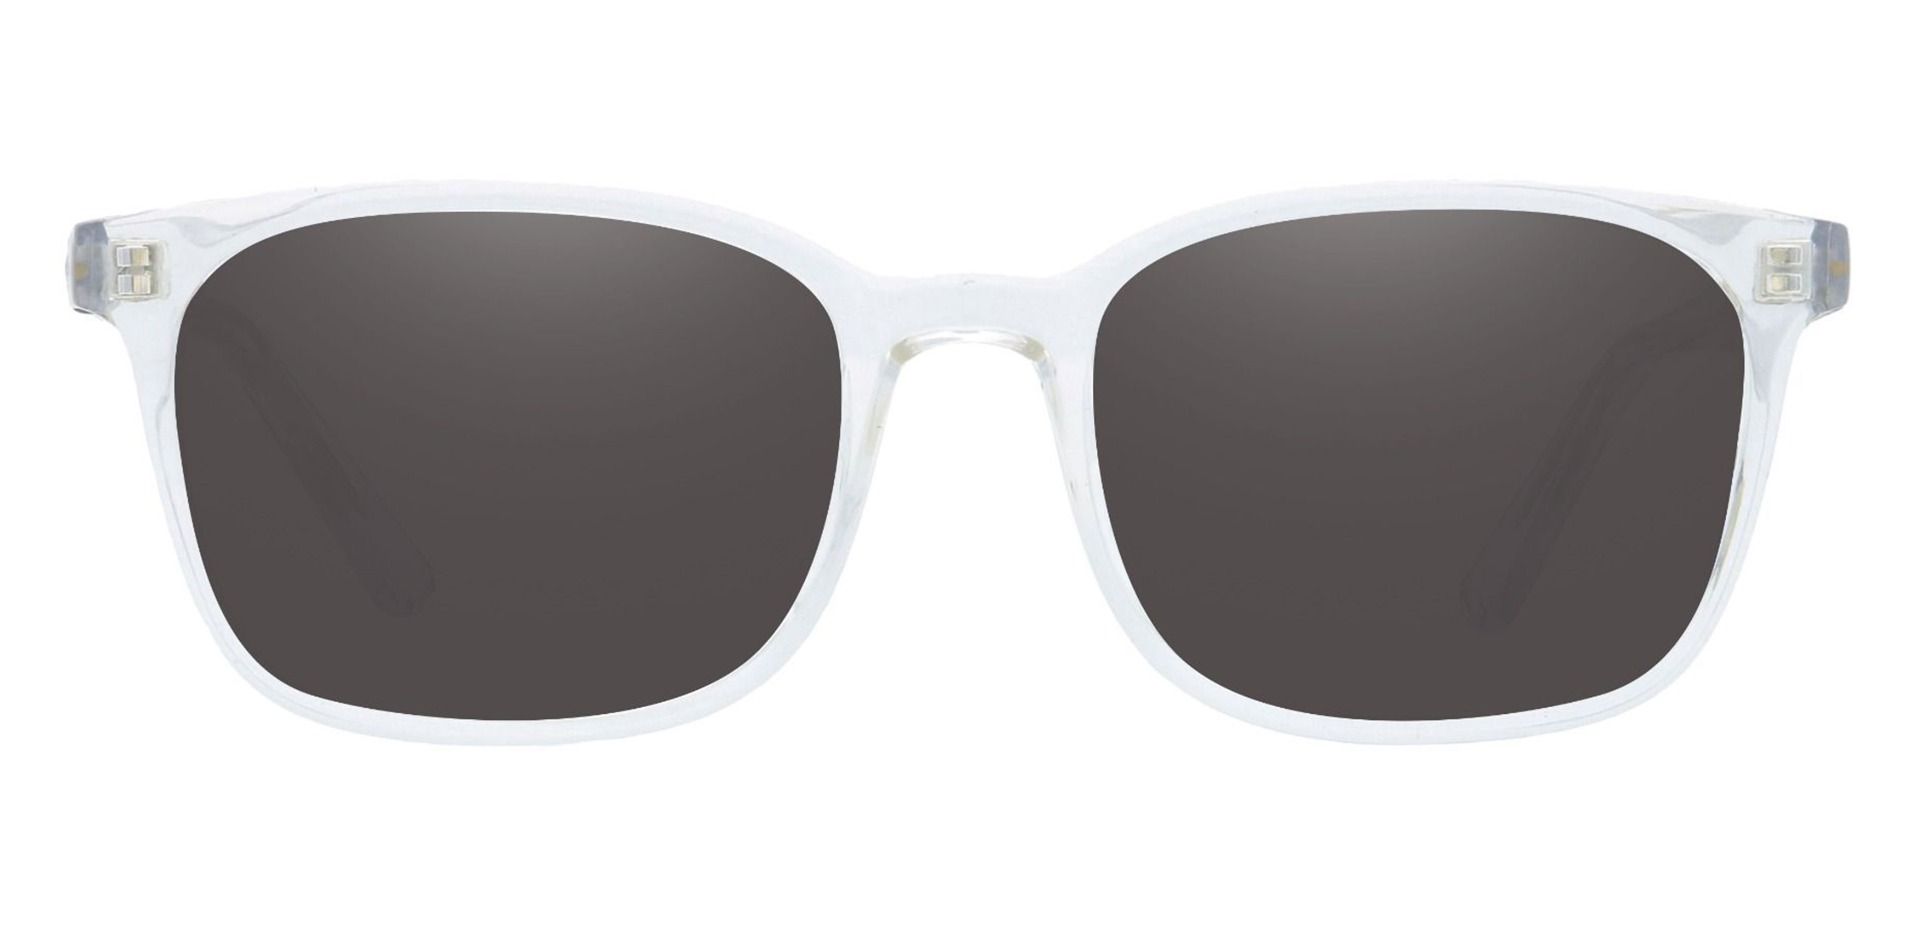 Ladies Polarized Sunglasses that Fit Over Prescription Glasses Featuring  Rhinestones - Mass Vision Eyewear